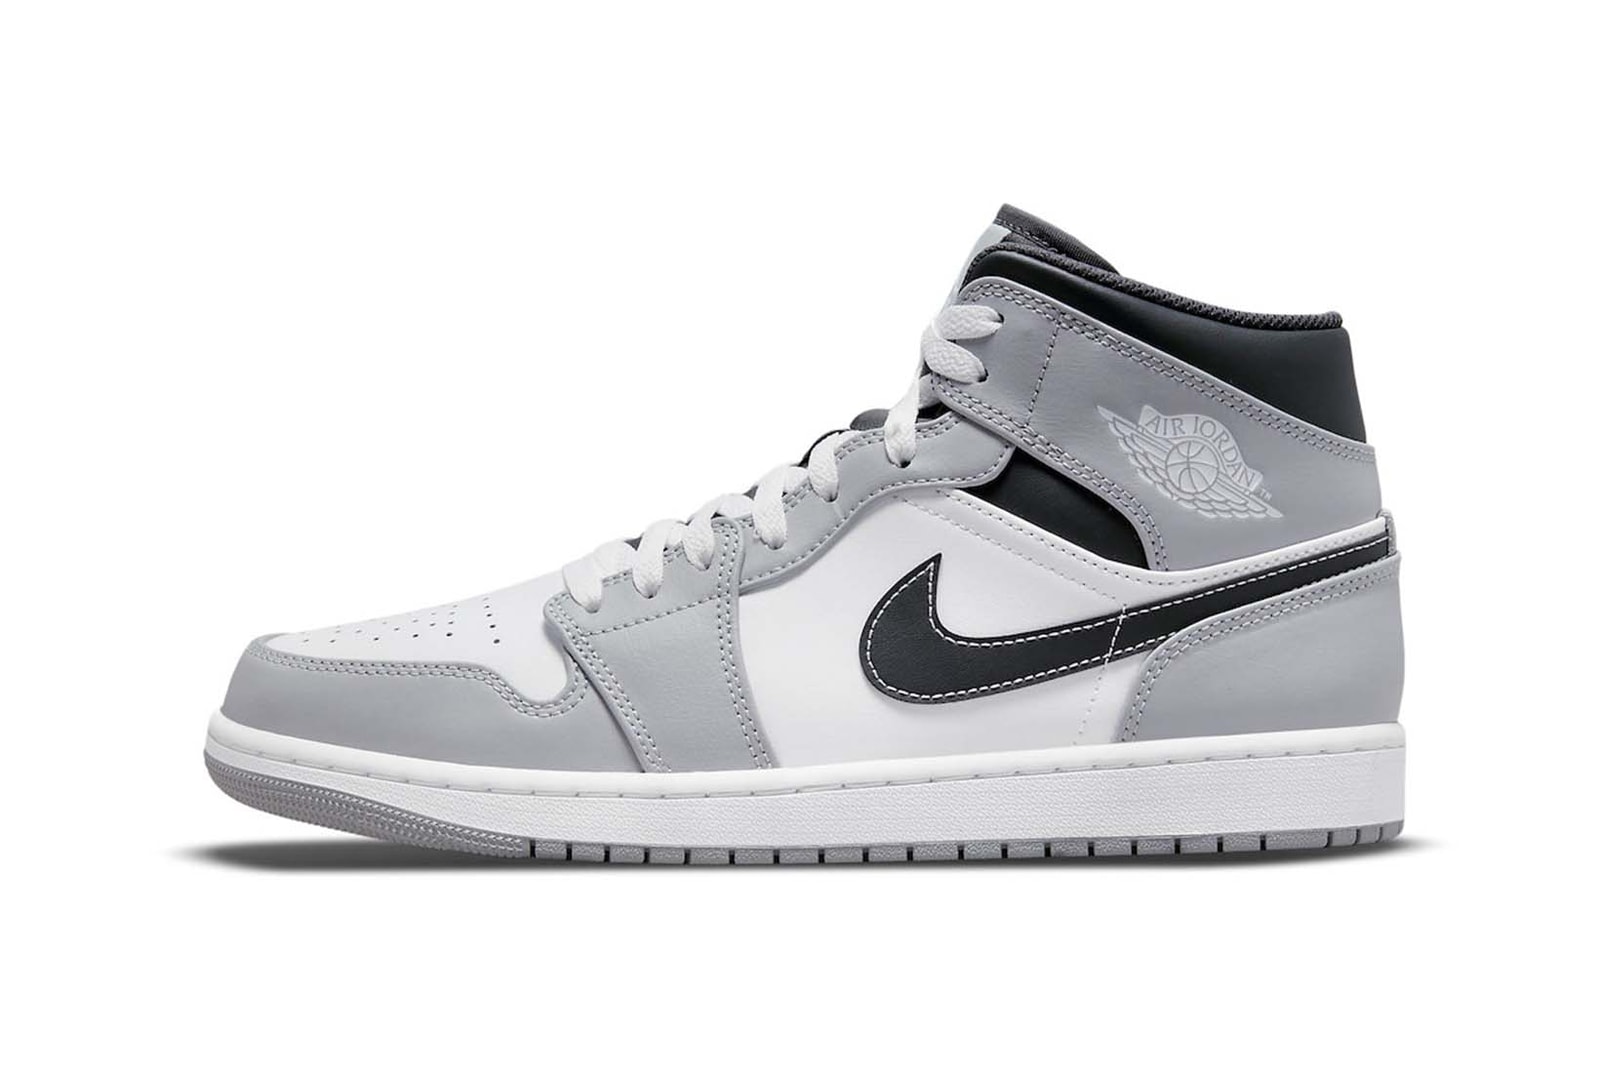 Sneaker Release Schedule Release Info adidas Yeezy Nike Air Jordan Converse Reebok Release Info Price Collaborations